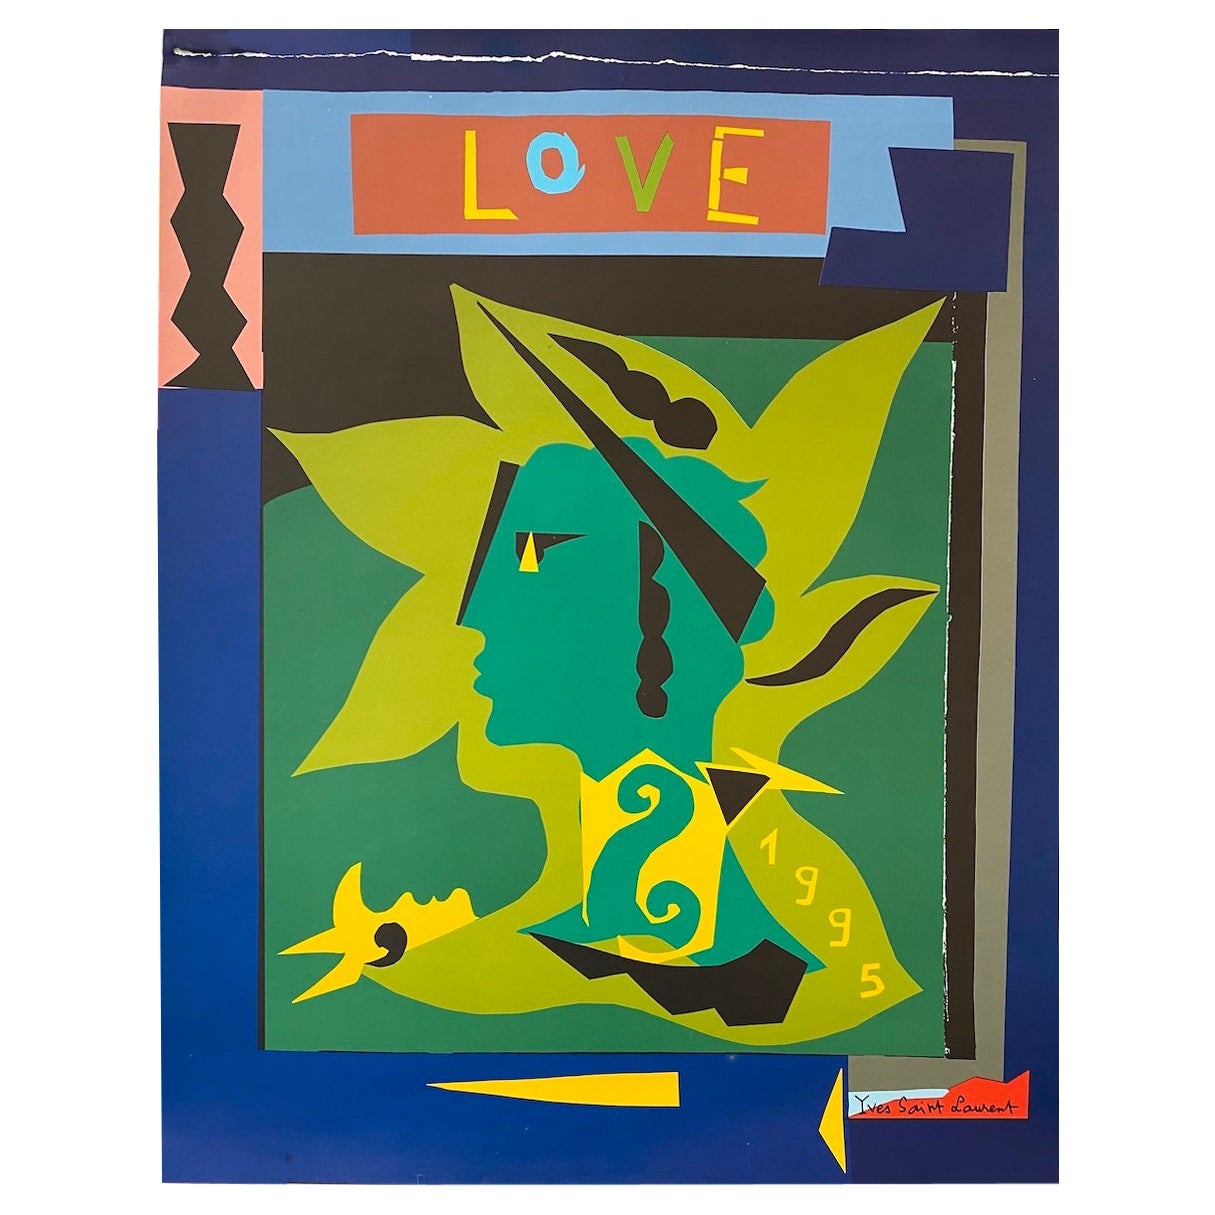 Yves Saint Laurent 'LOVE 1998' Original Vintage Poster   For Sale